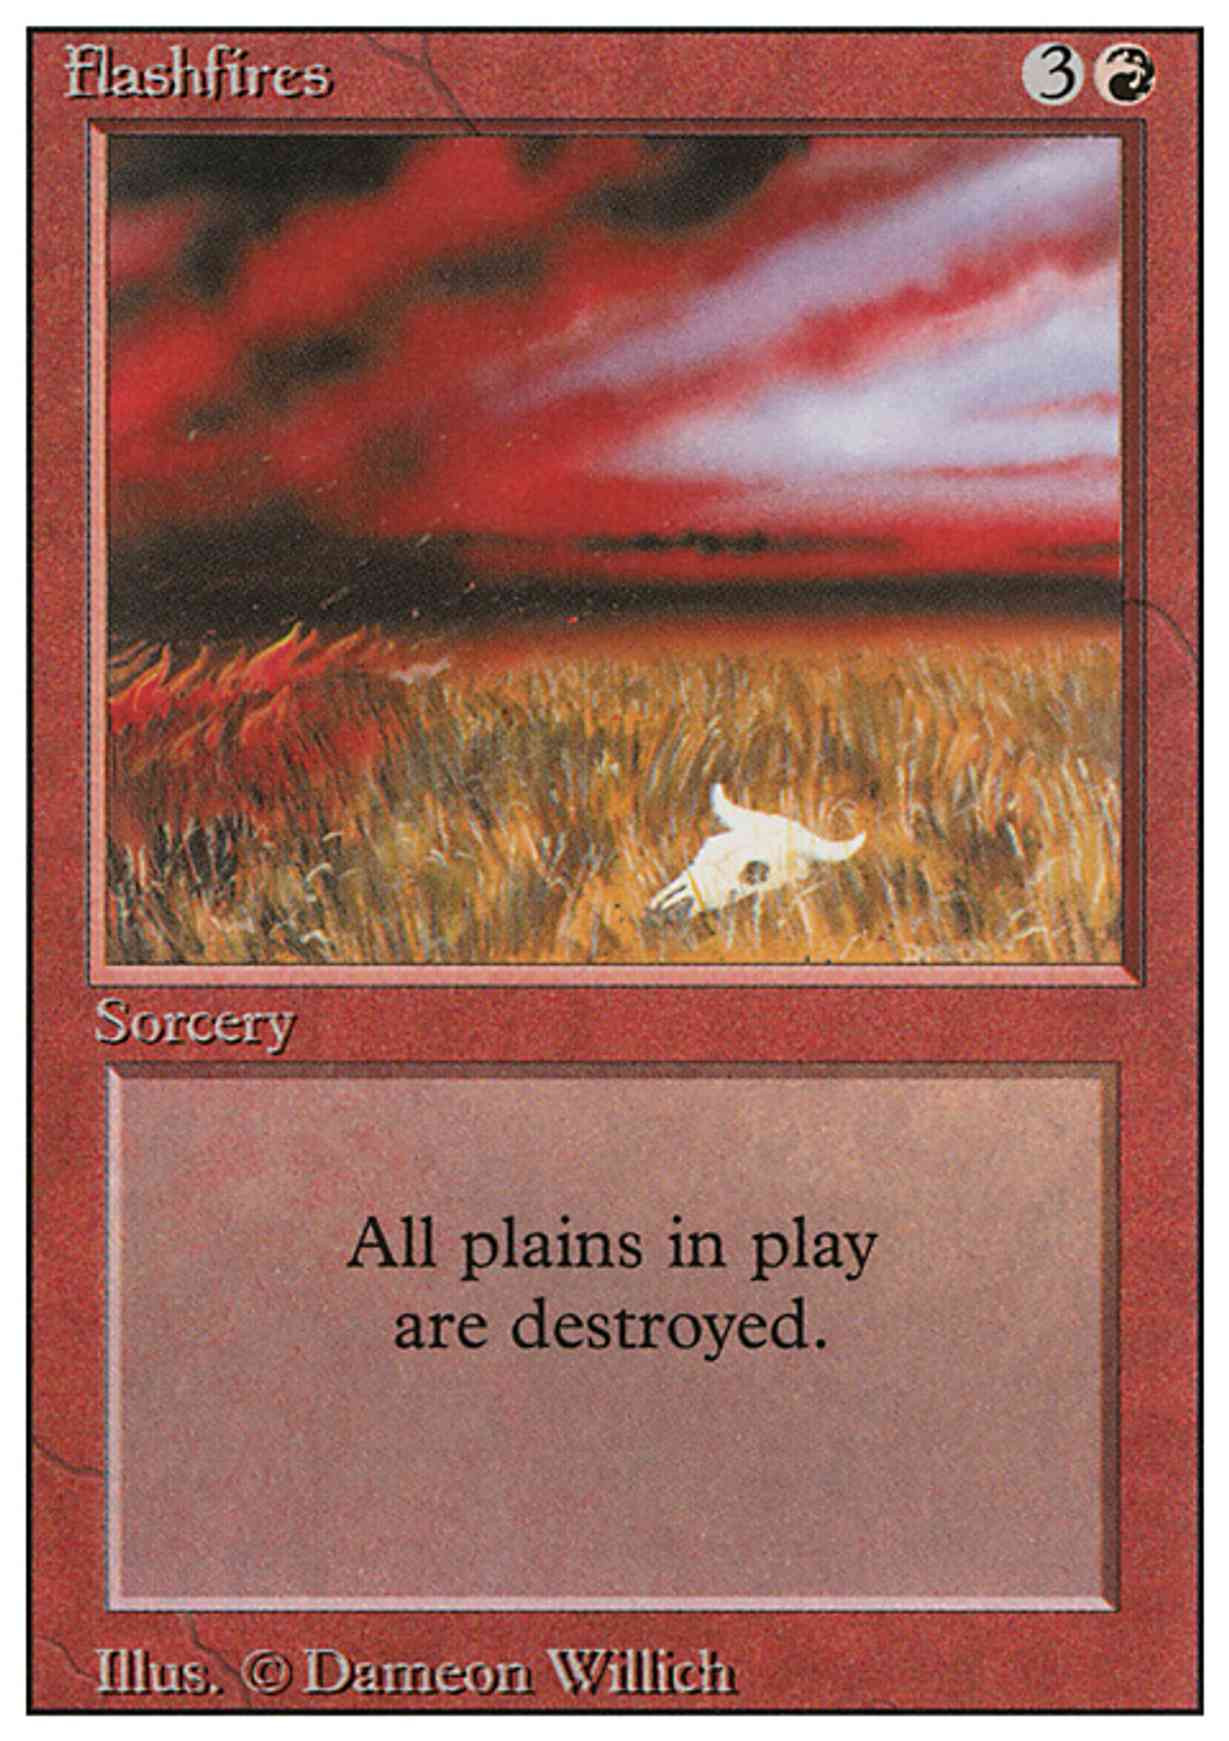 Flashfires magic card front